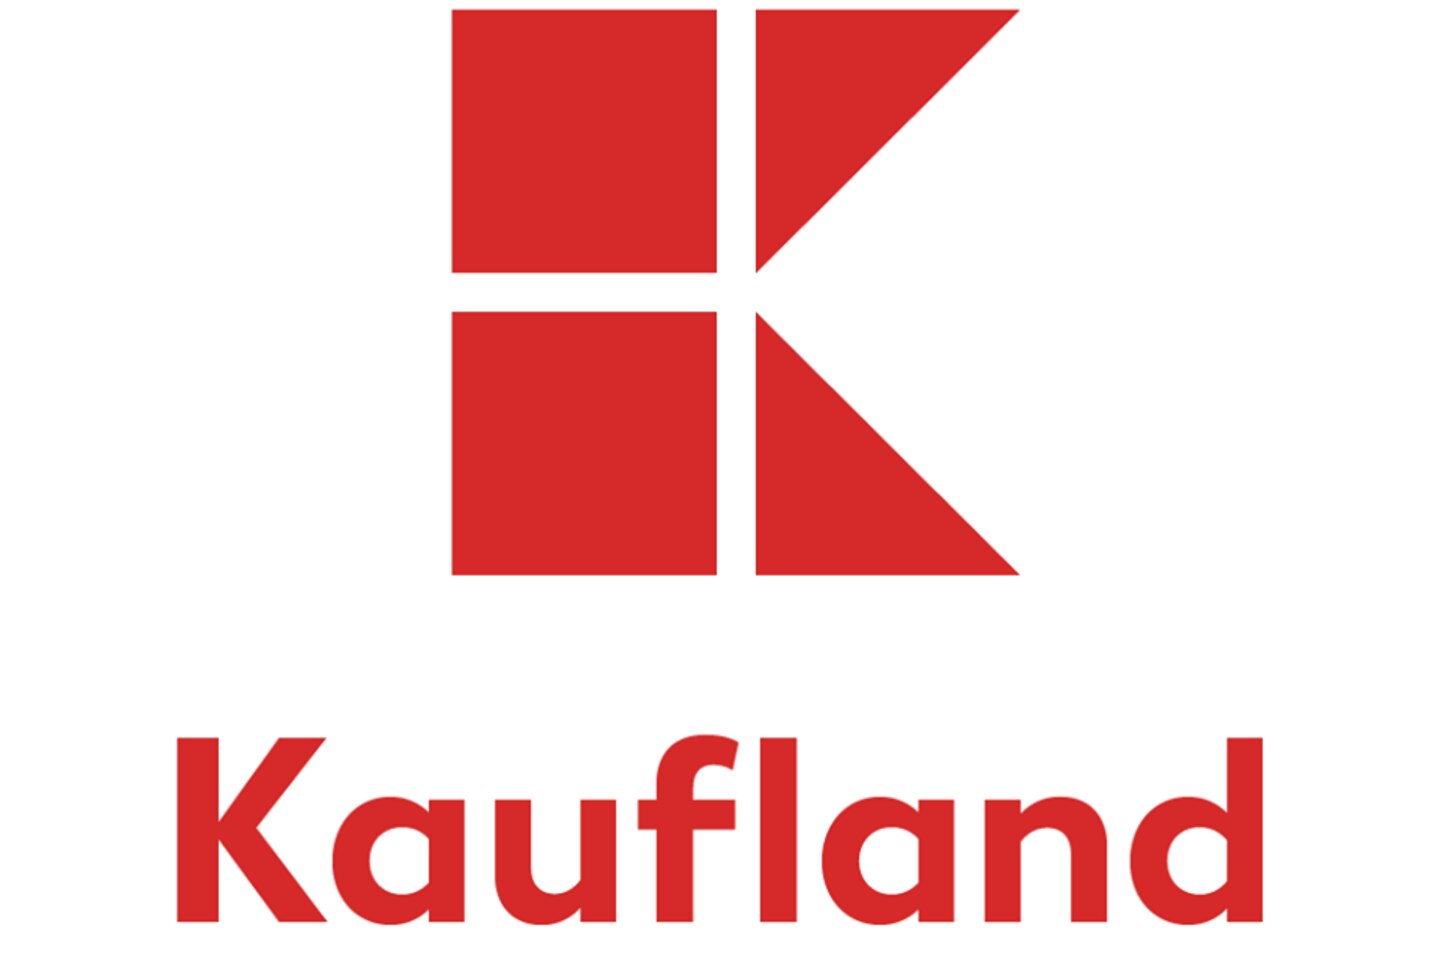 Kaufland Logo 